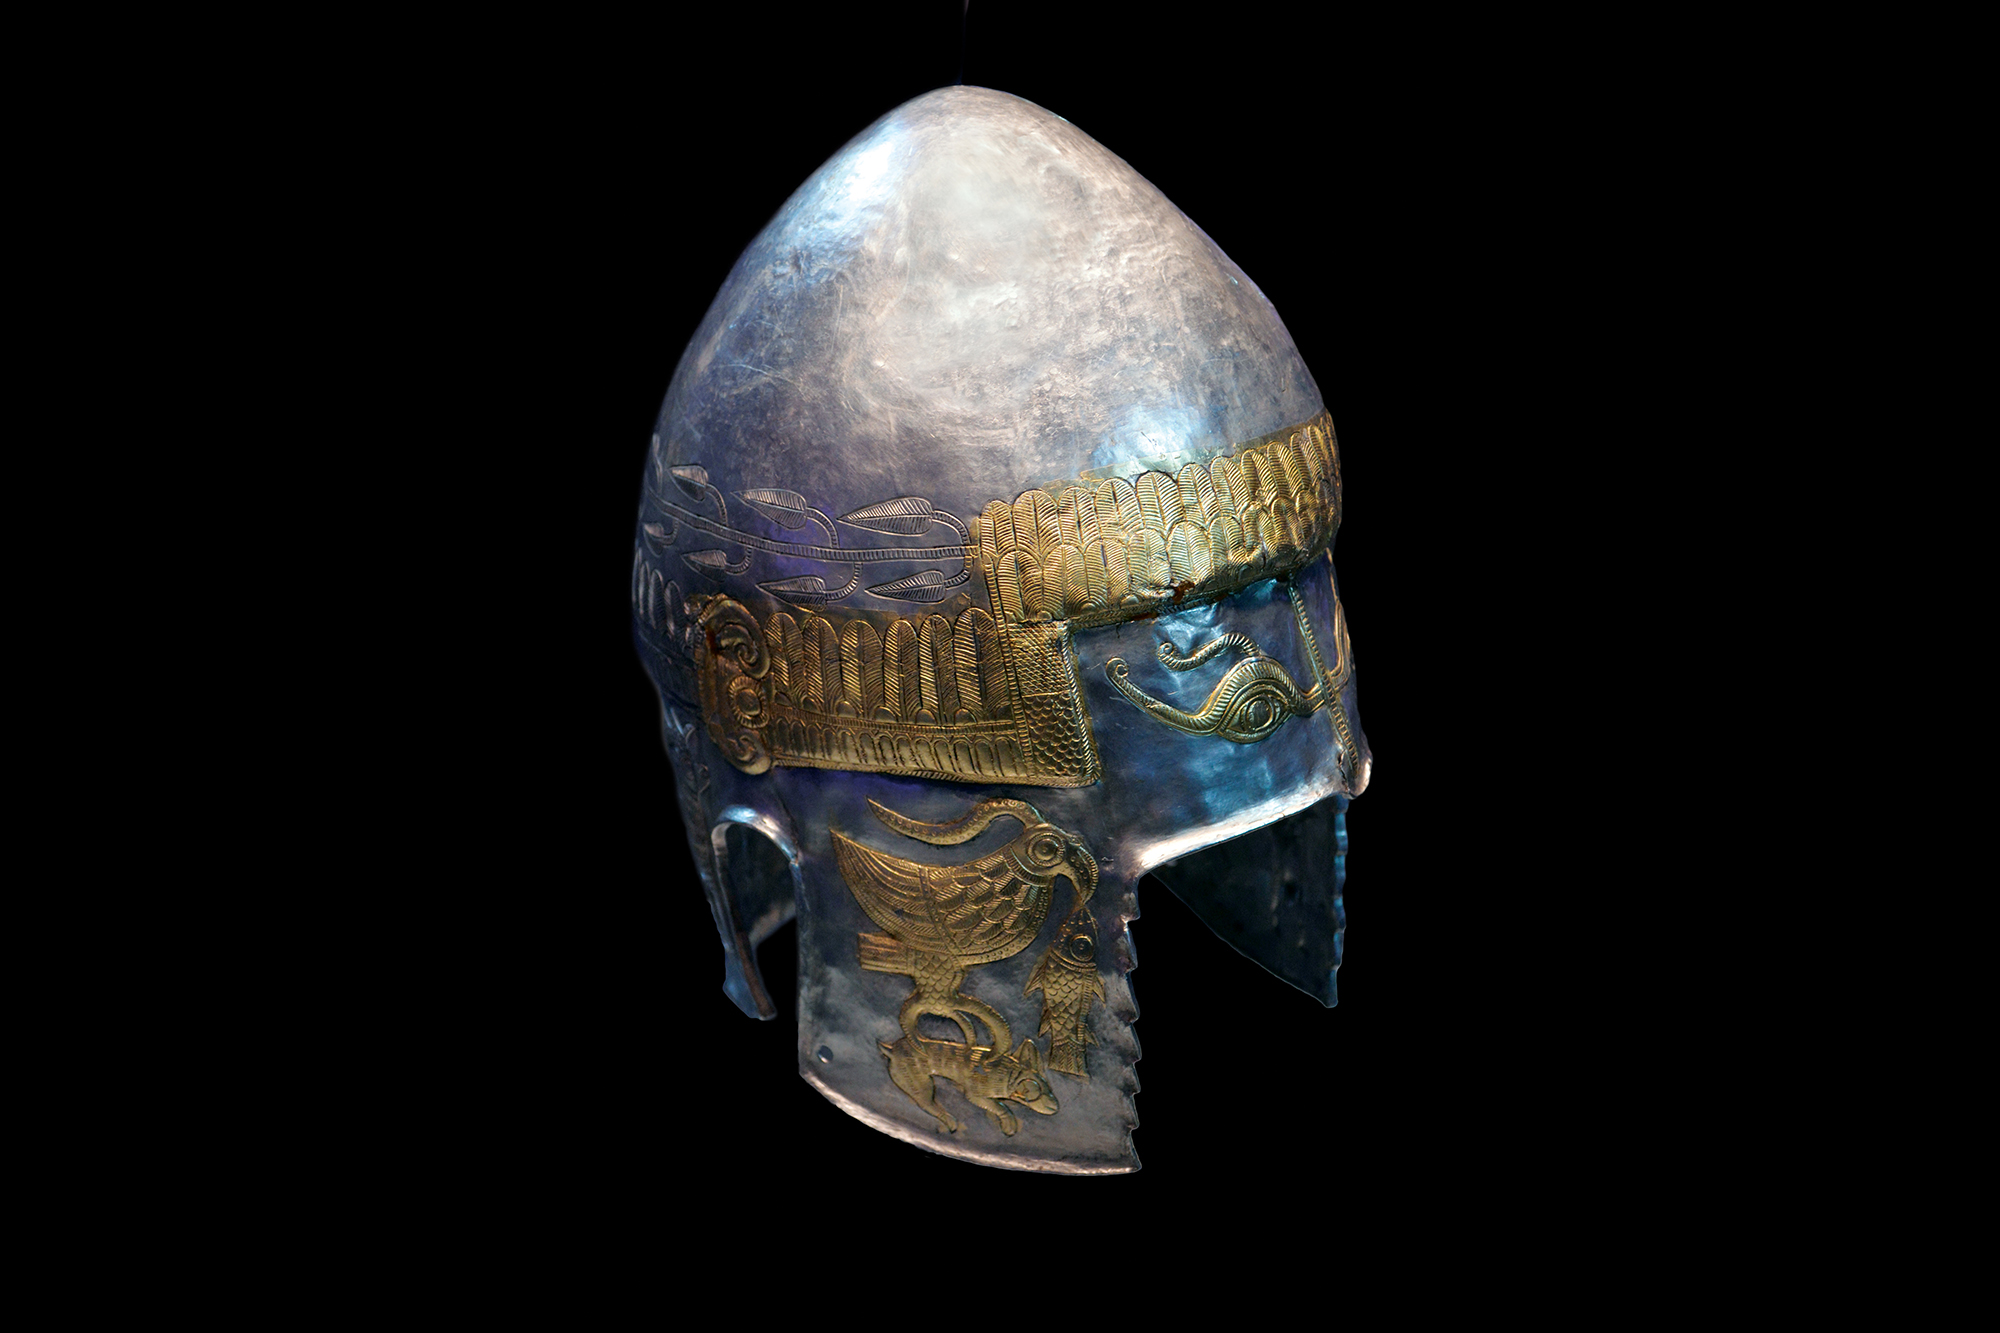 Photograph of an early European helmet.